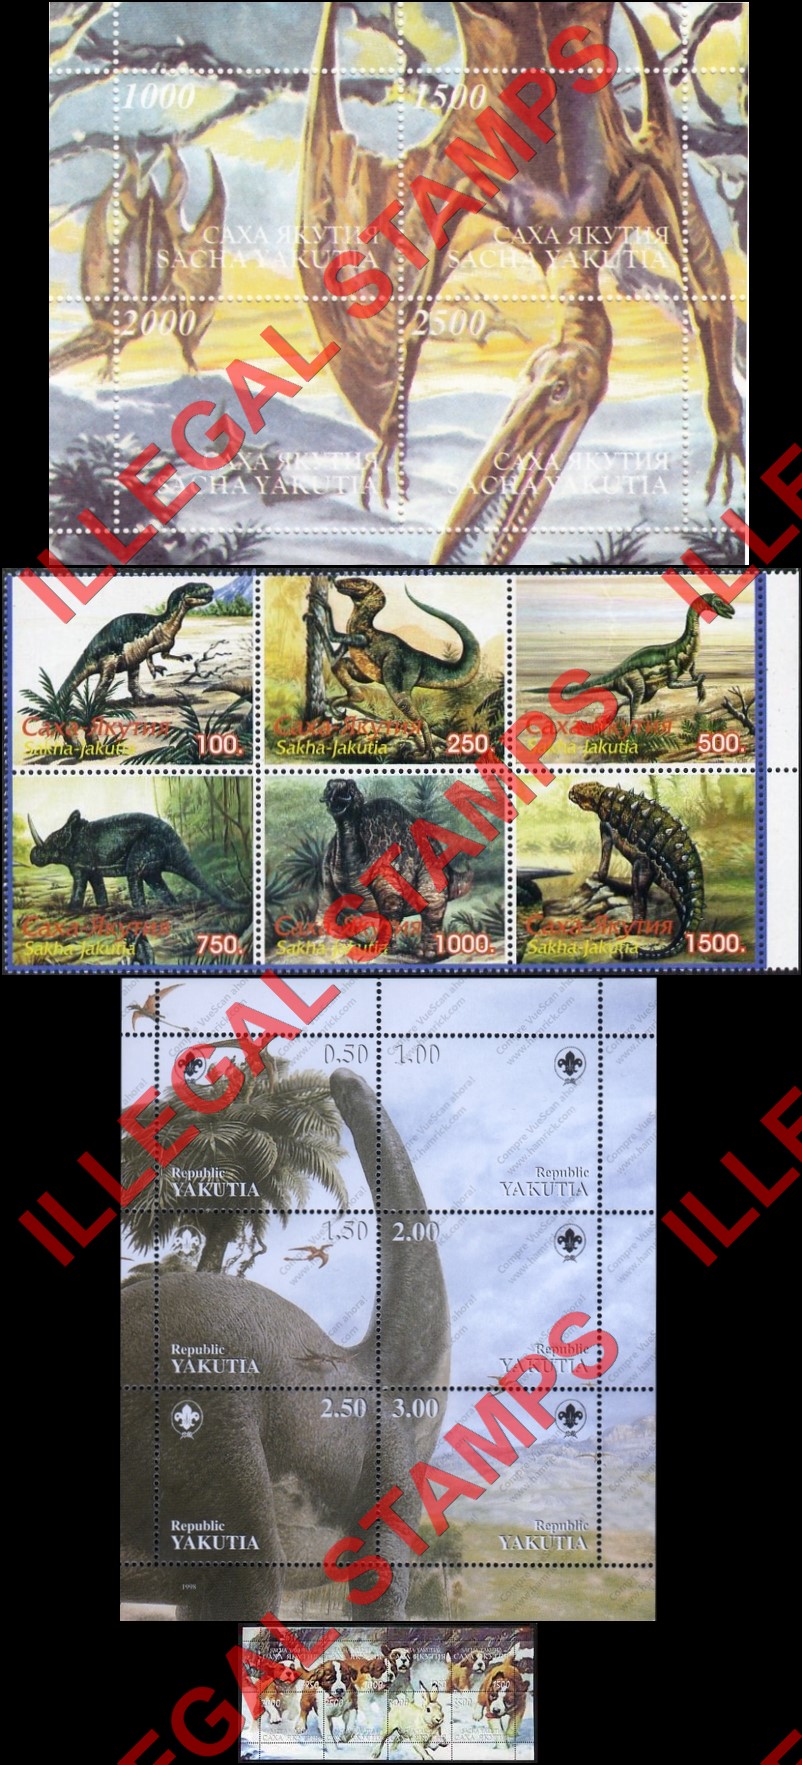 Republic of Sakha Yakutia 1998 Counterfeit Illegal Stamps (Part 2)